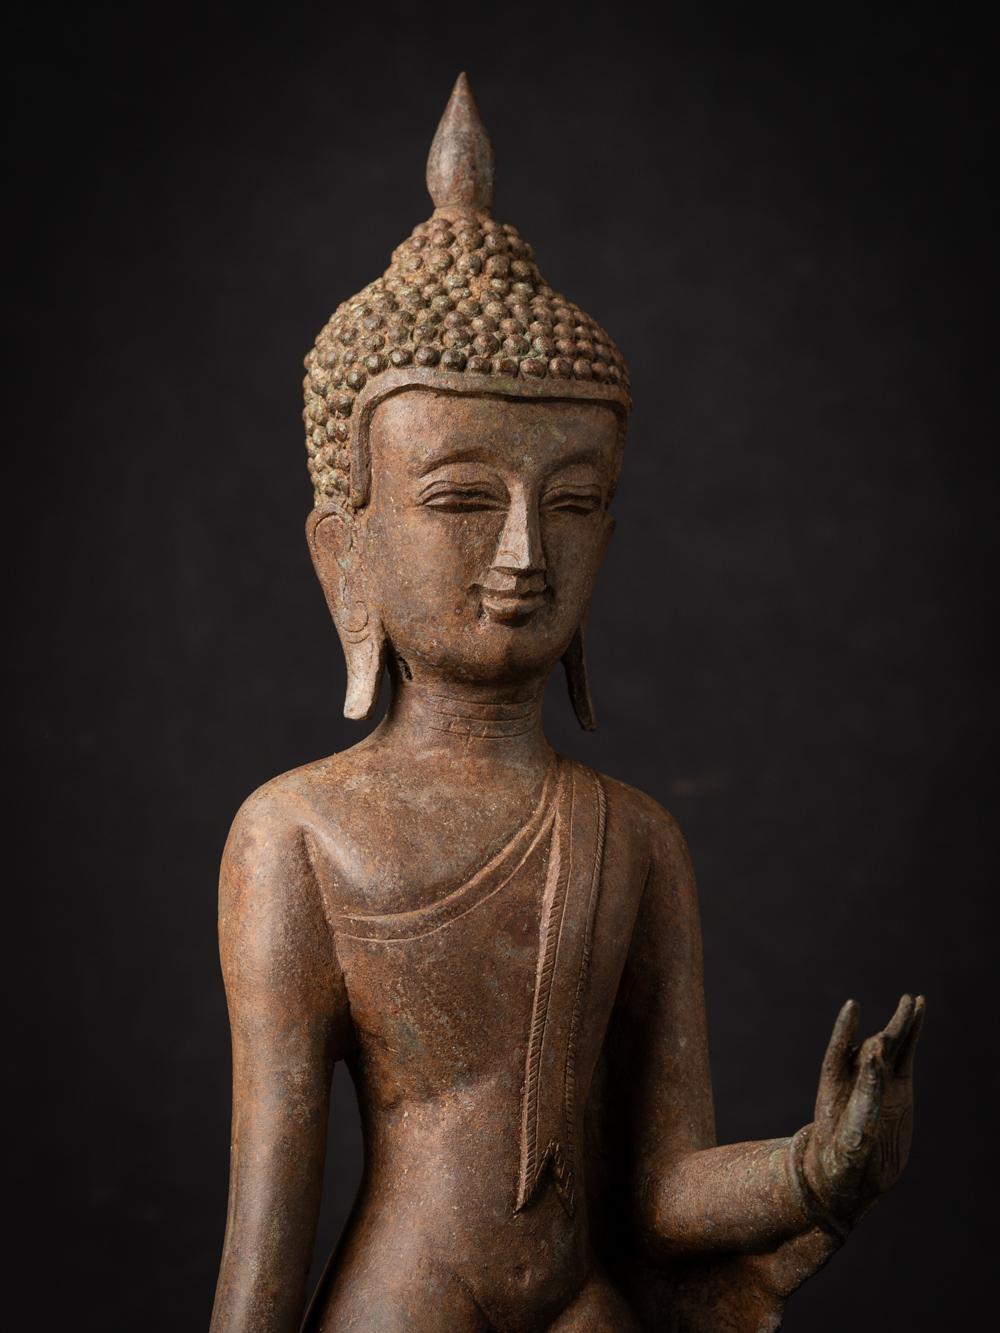 20th Century Old bronze Burmese Buddha statue from Burma - Originalbuddhas For Sale